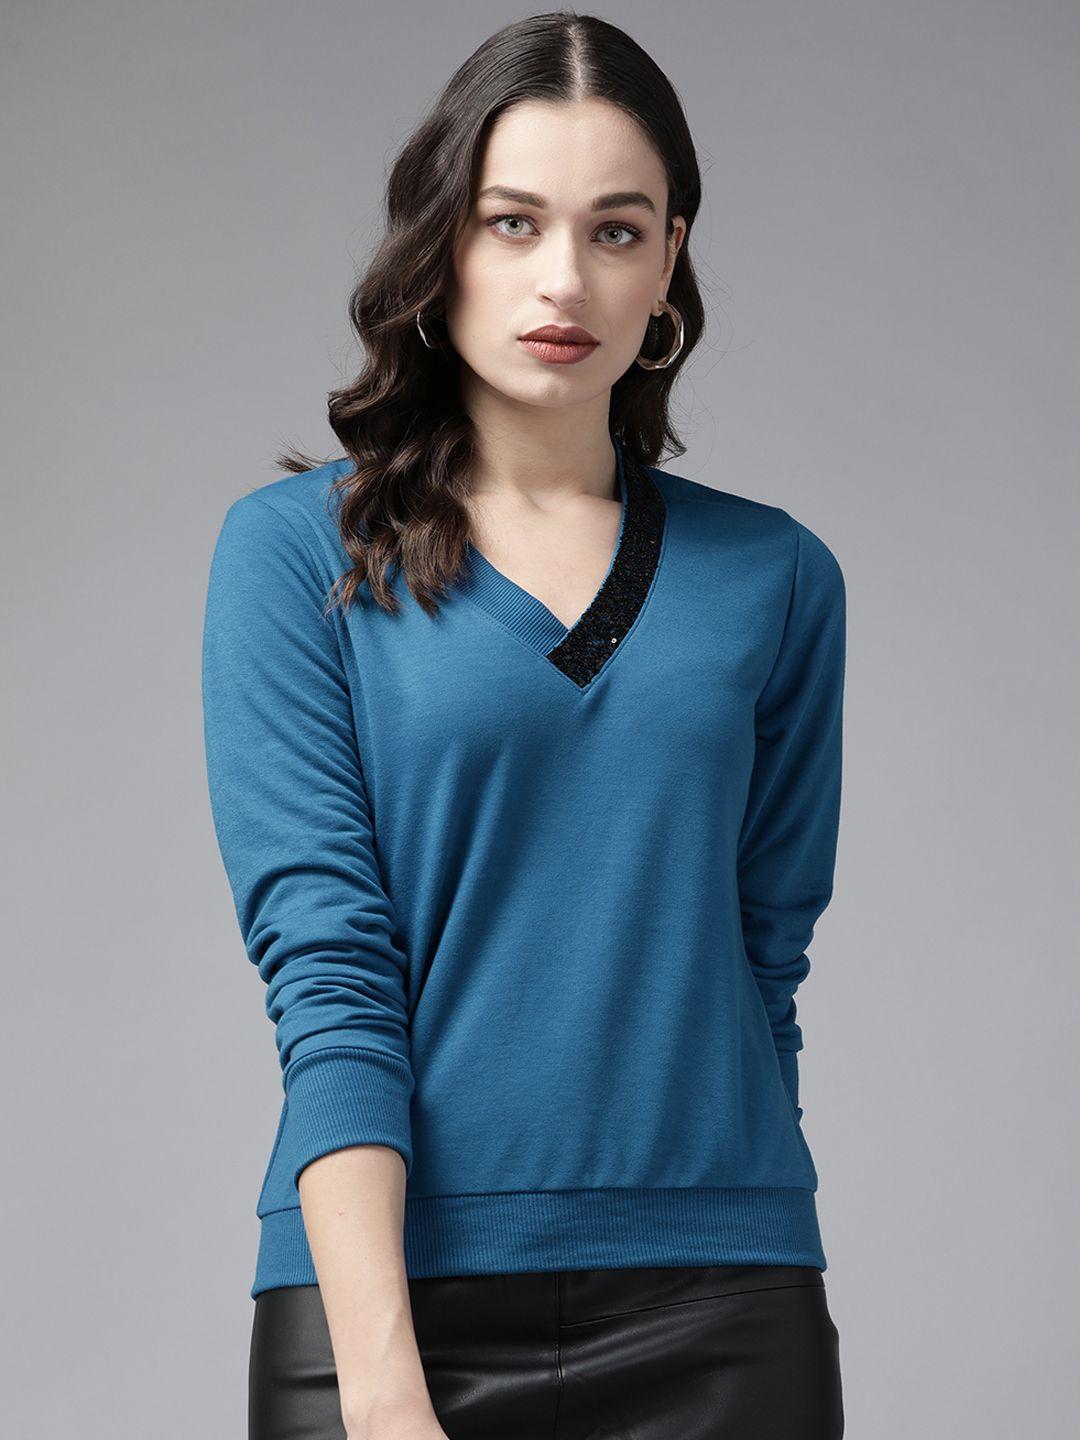 kassually-women-teal-blue-solid-sweatshirt